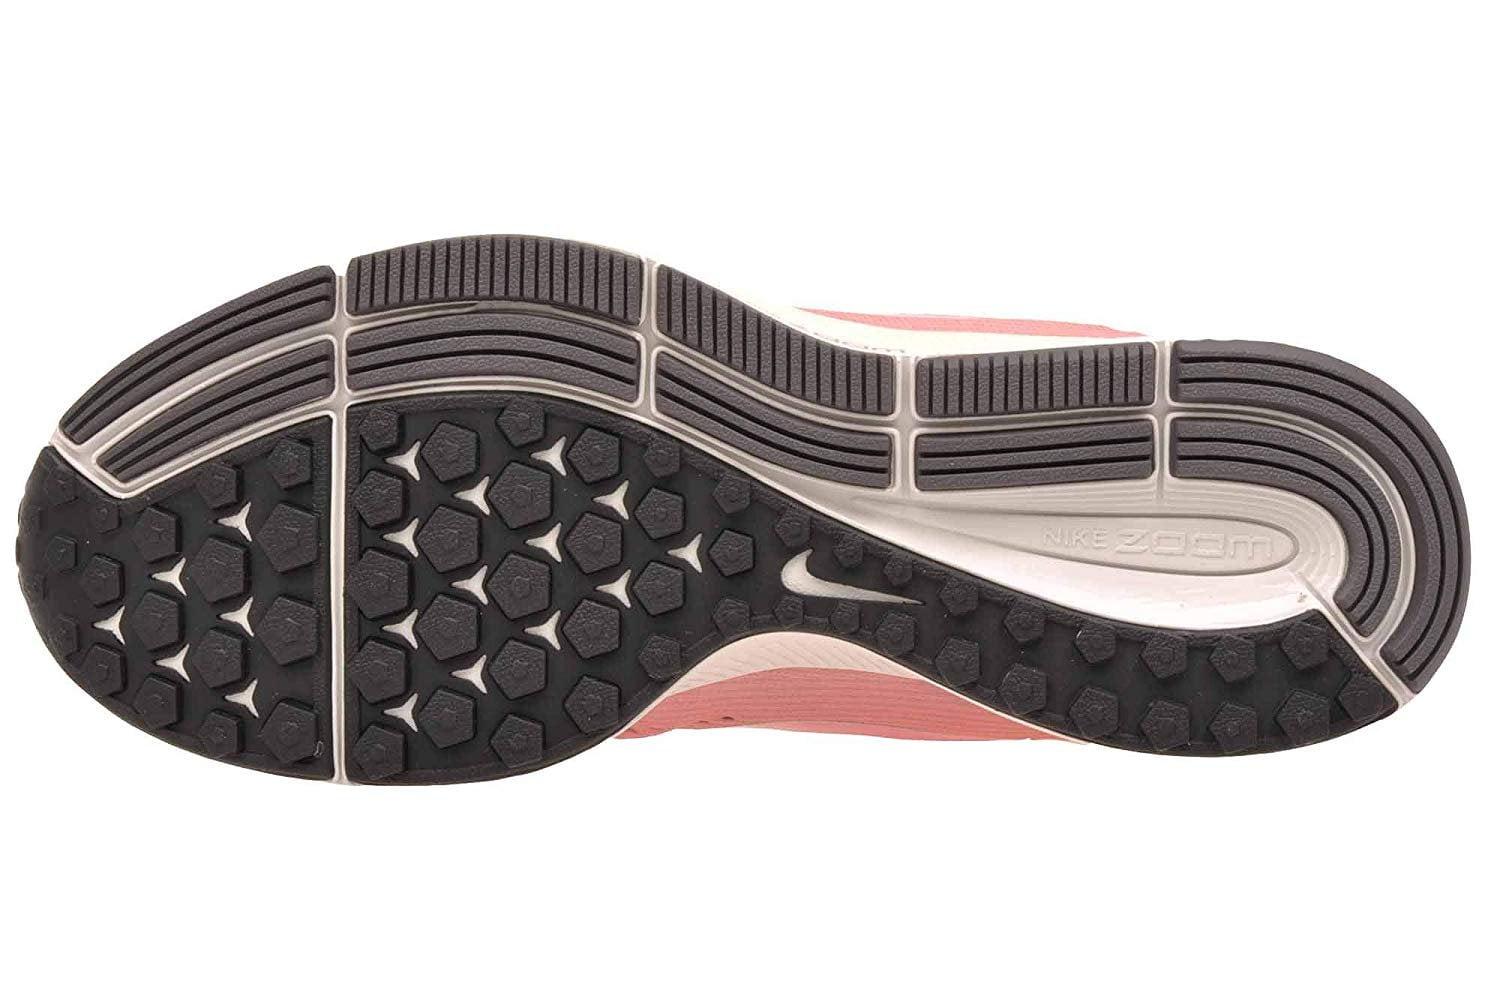 Nike Women's Zoom Pegasus 34 Rust Pink / Tropical Ankle-High Running - 8.5W - Walmart.com